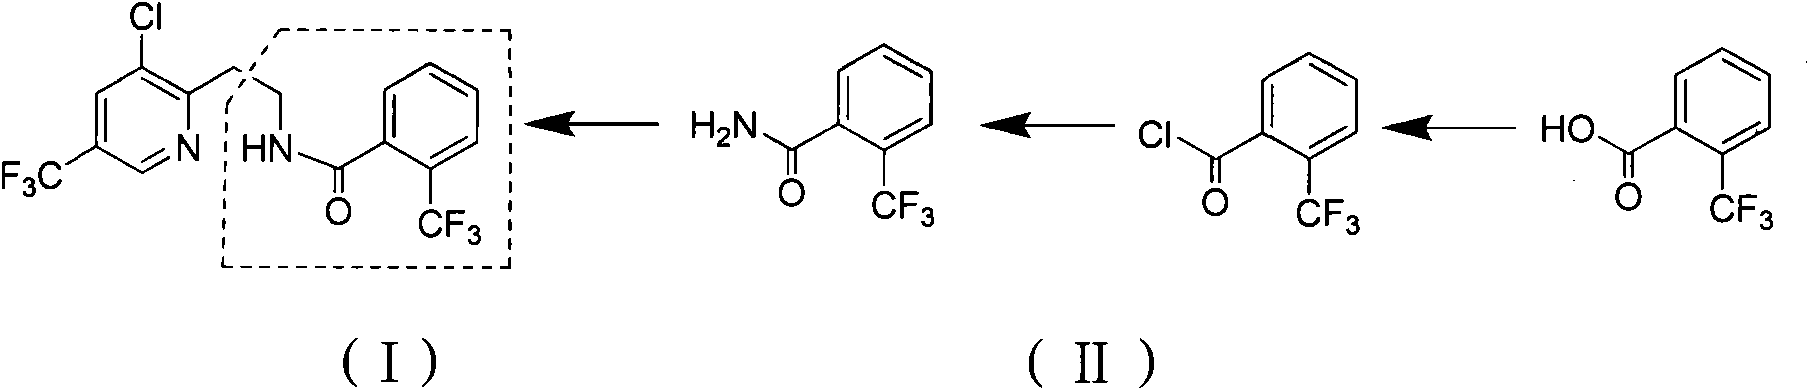 Preparation method of 2-trifluoromethyl benzoic acid